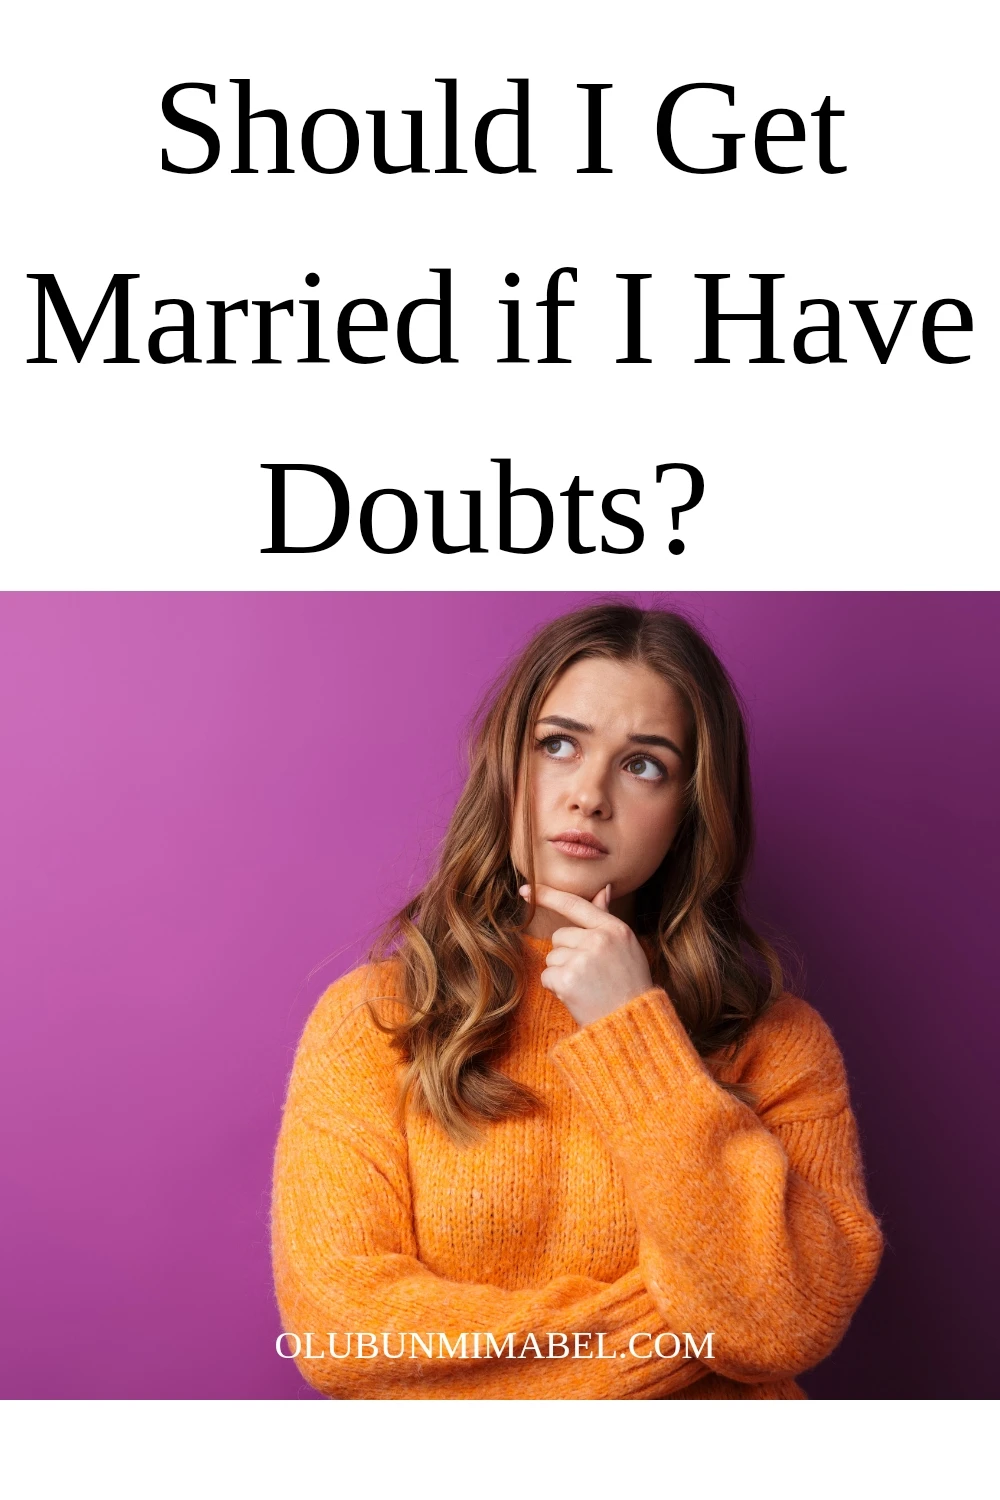 Should I Get Married If I Have Doubts